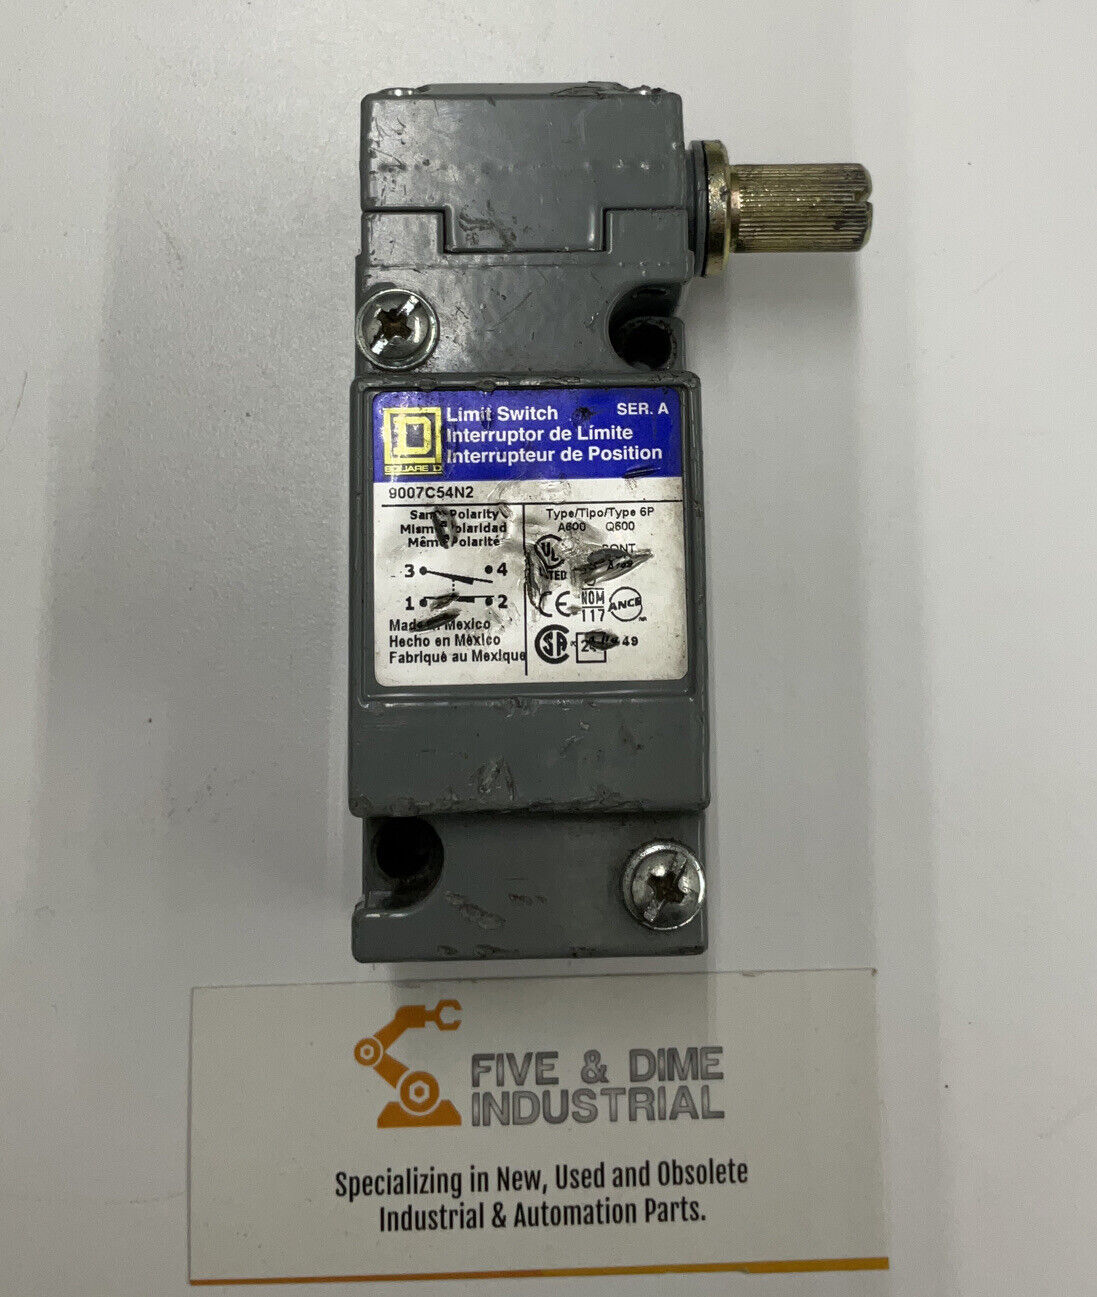 Square D 9007C54N2 Heavy Duty Limit Switch Ser. A (CL137)